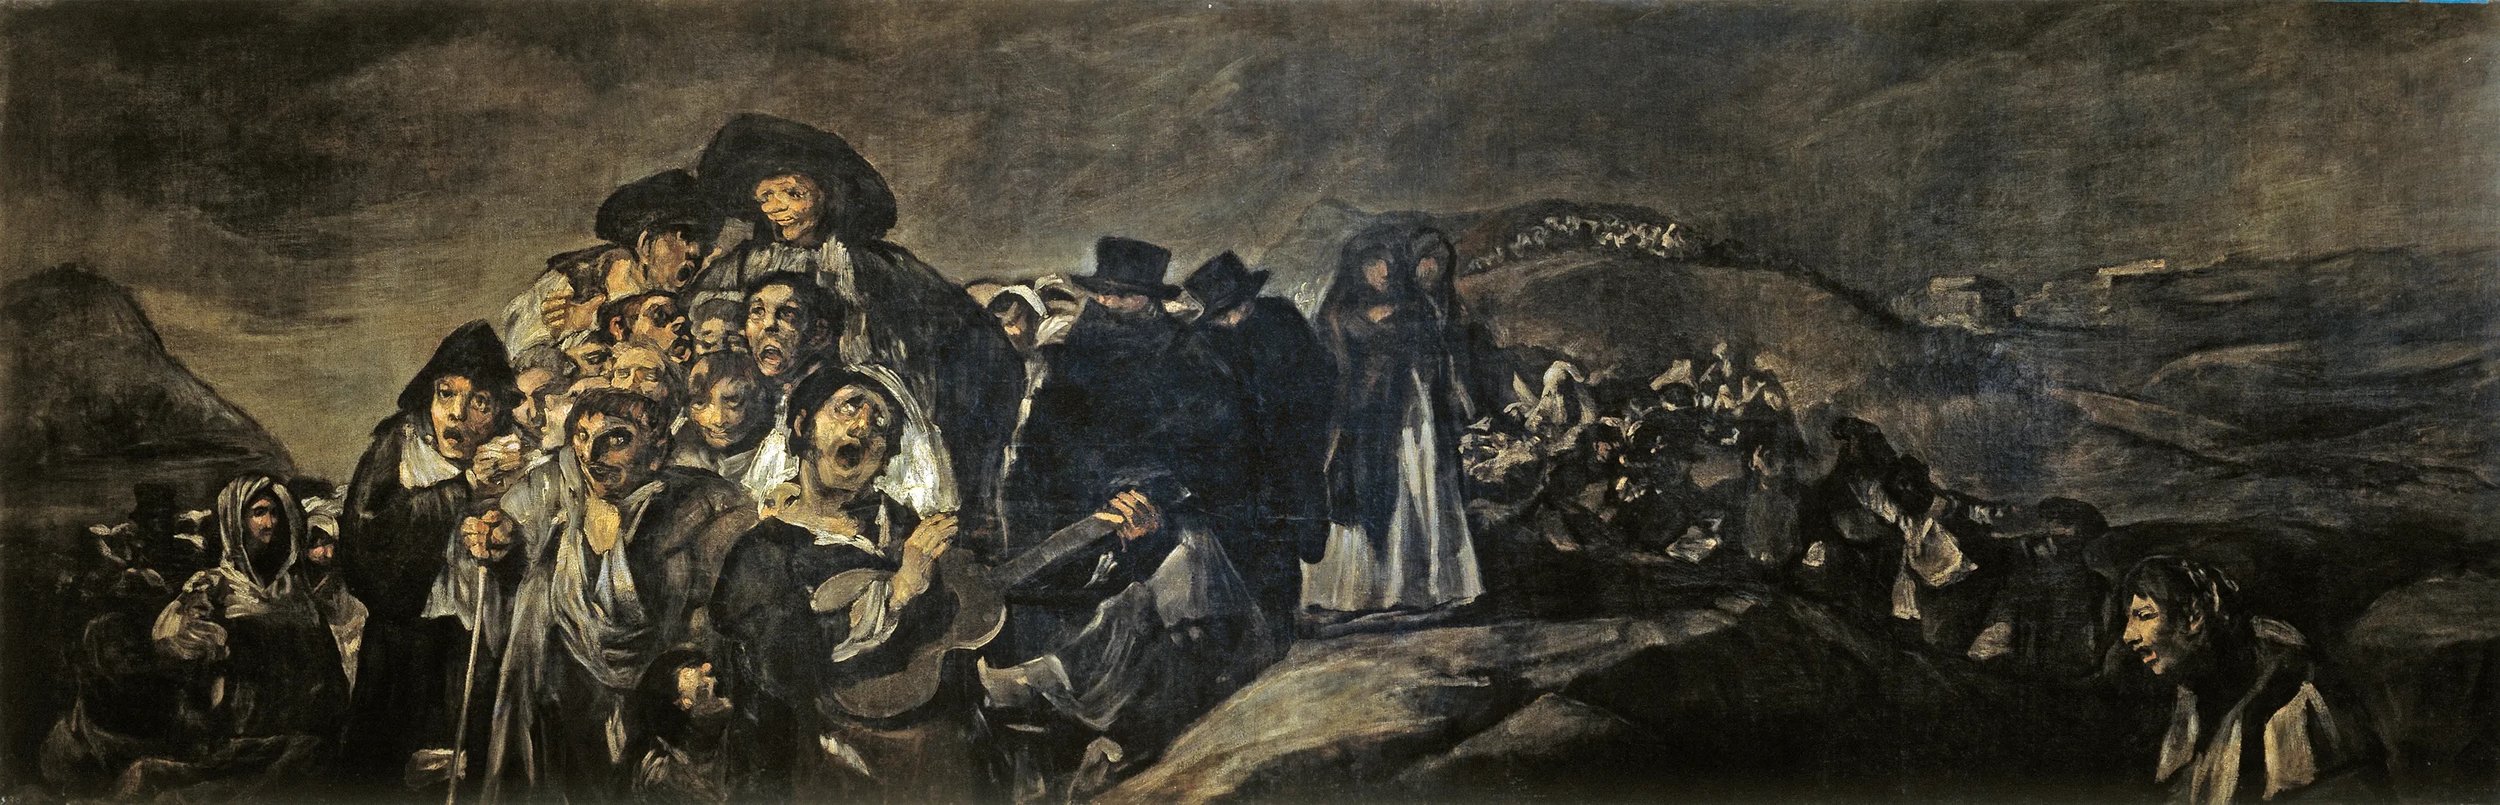 A-Pilgrimage-to-San-Isidro-by-Francisco-Goya-1746–1828-Public-Domain-via-Creative-Commons (1).jpeg